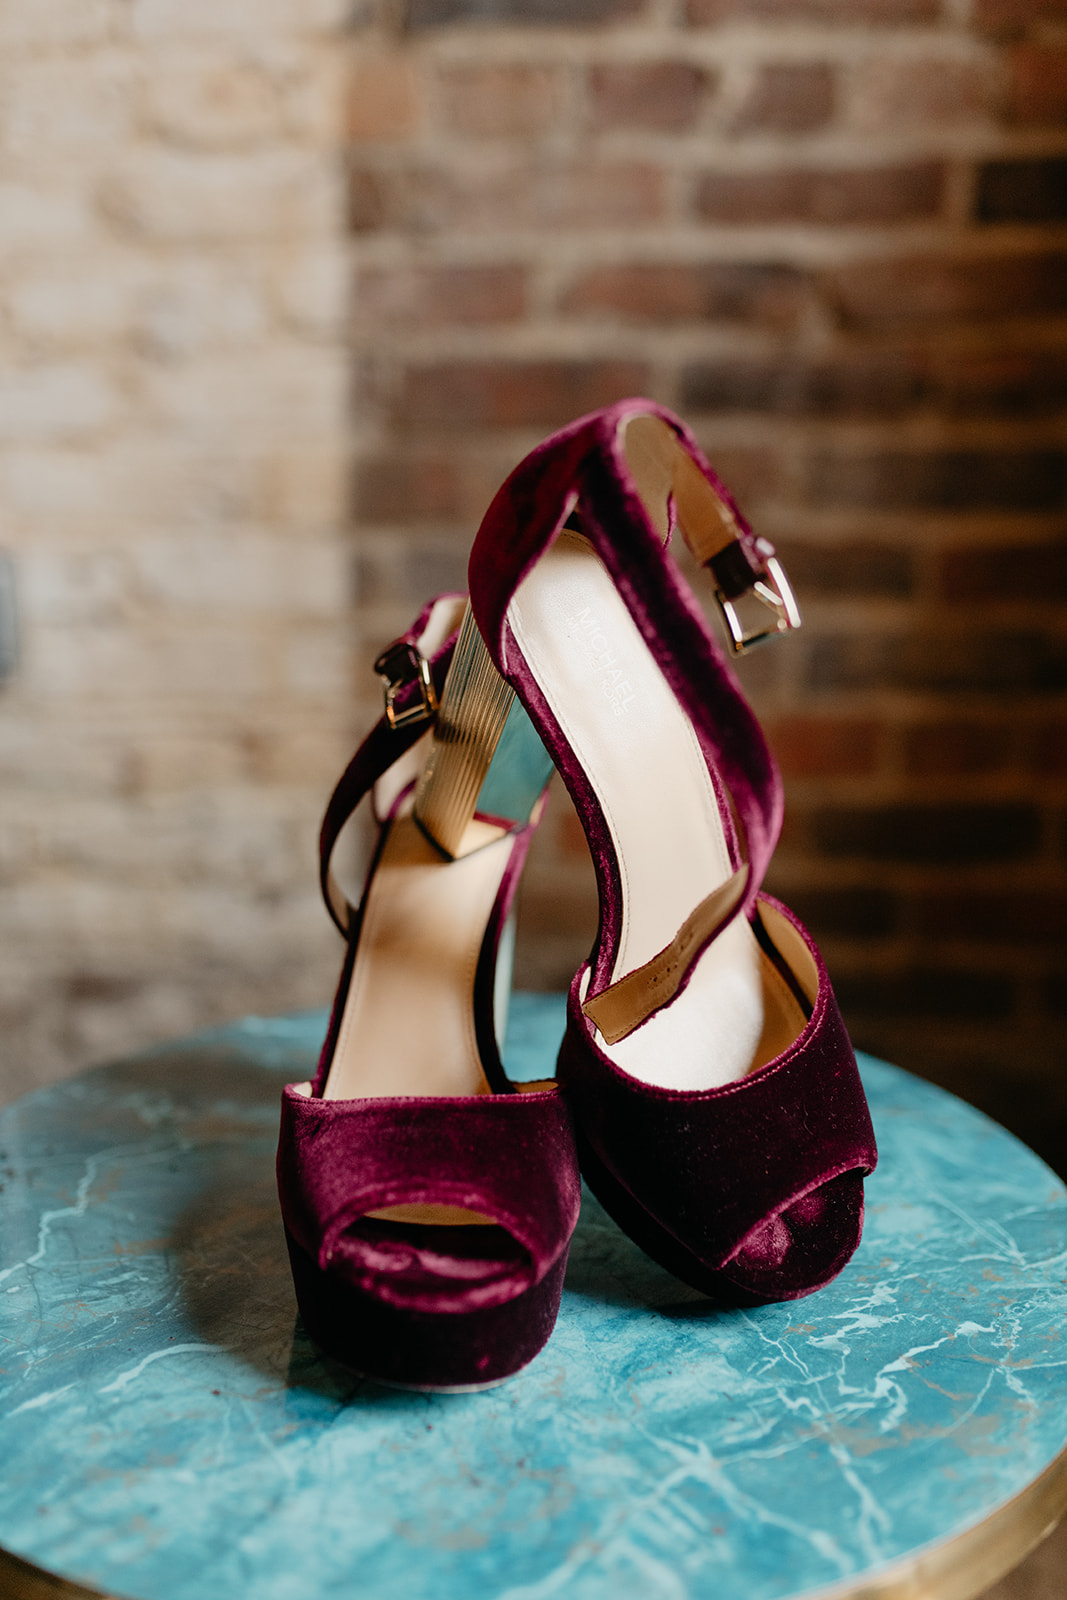 Plum velvet bride's shoes!